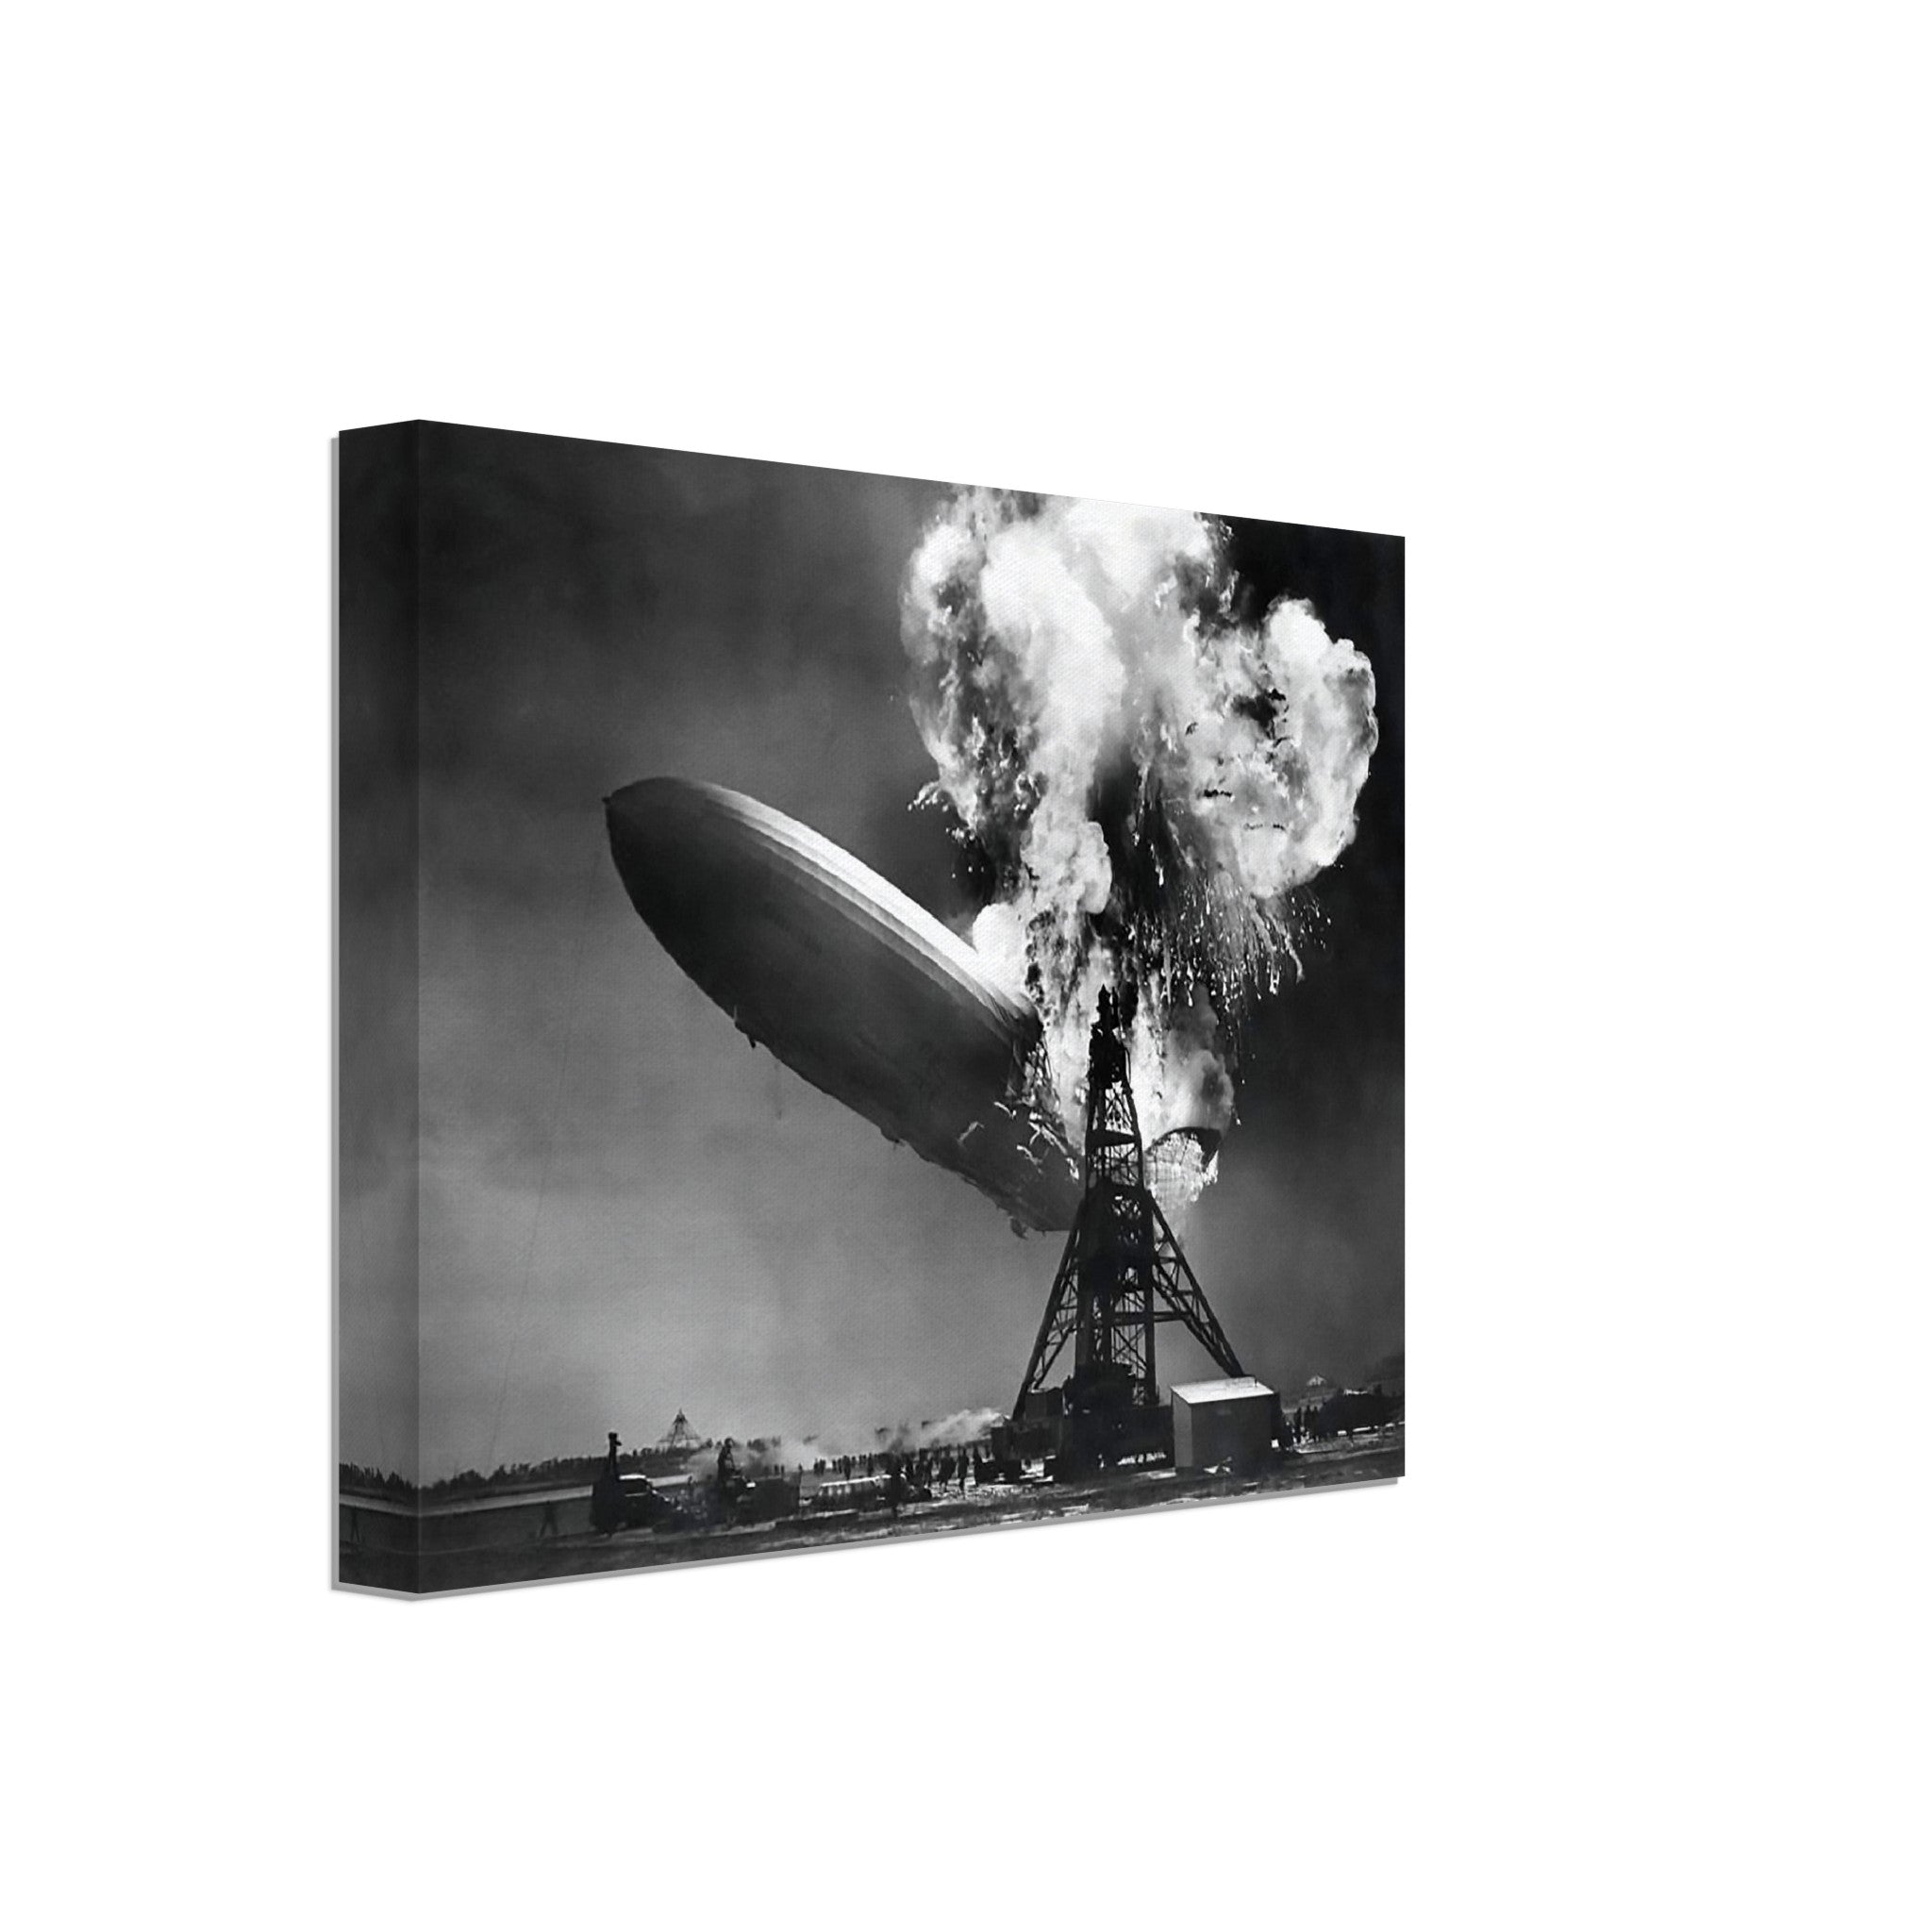 Hindenburg Disaster Canvas, Famous Photo Canvas Print From 1937, Vintage Wall Art - Hindenburg Zeppelin Explodes - WallArtPrints4U